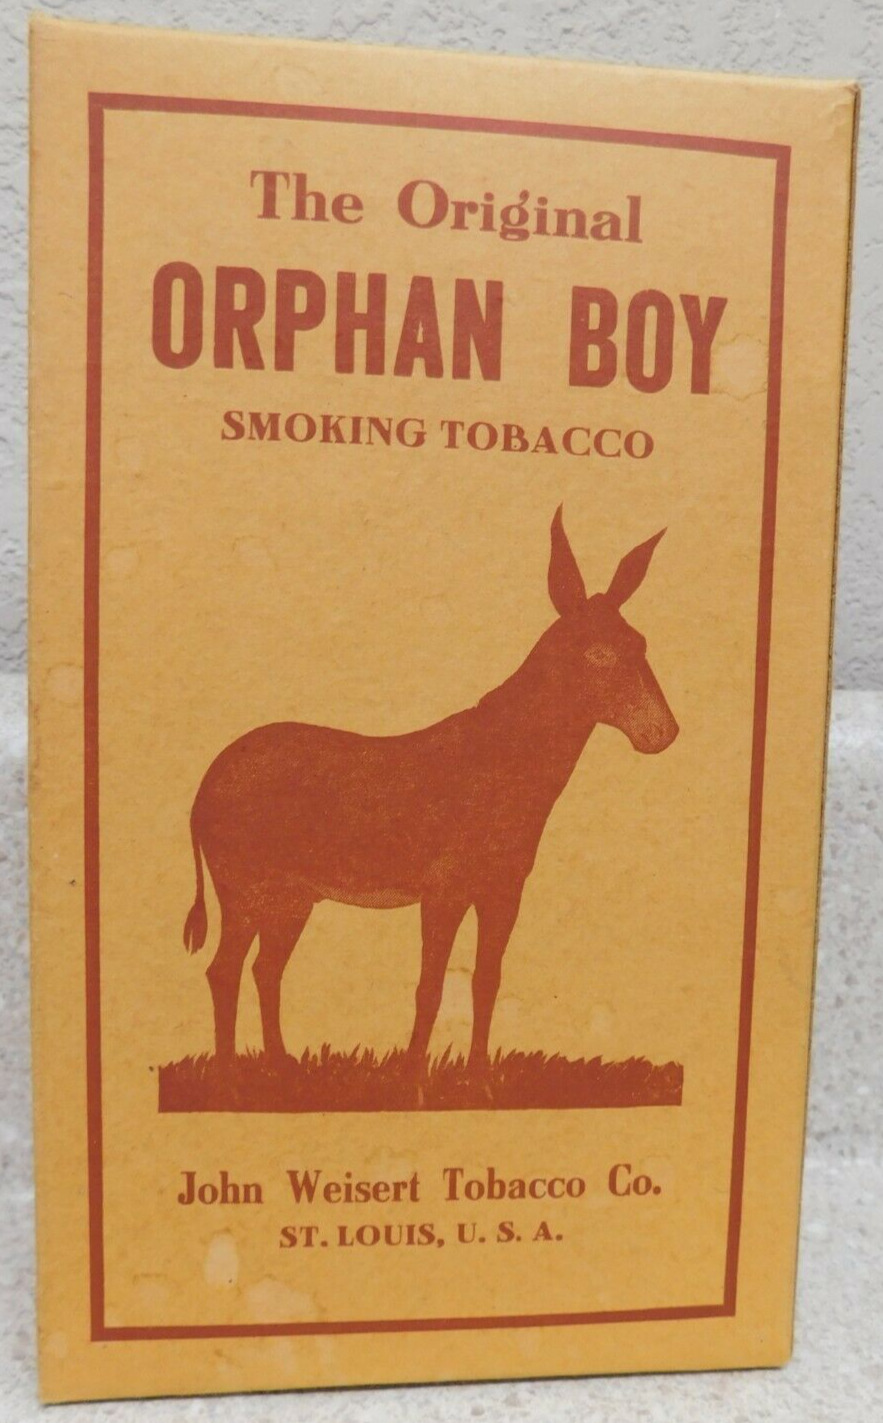 The Original Orphan Boy Cardboard Smoking Tobacco Carton Box